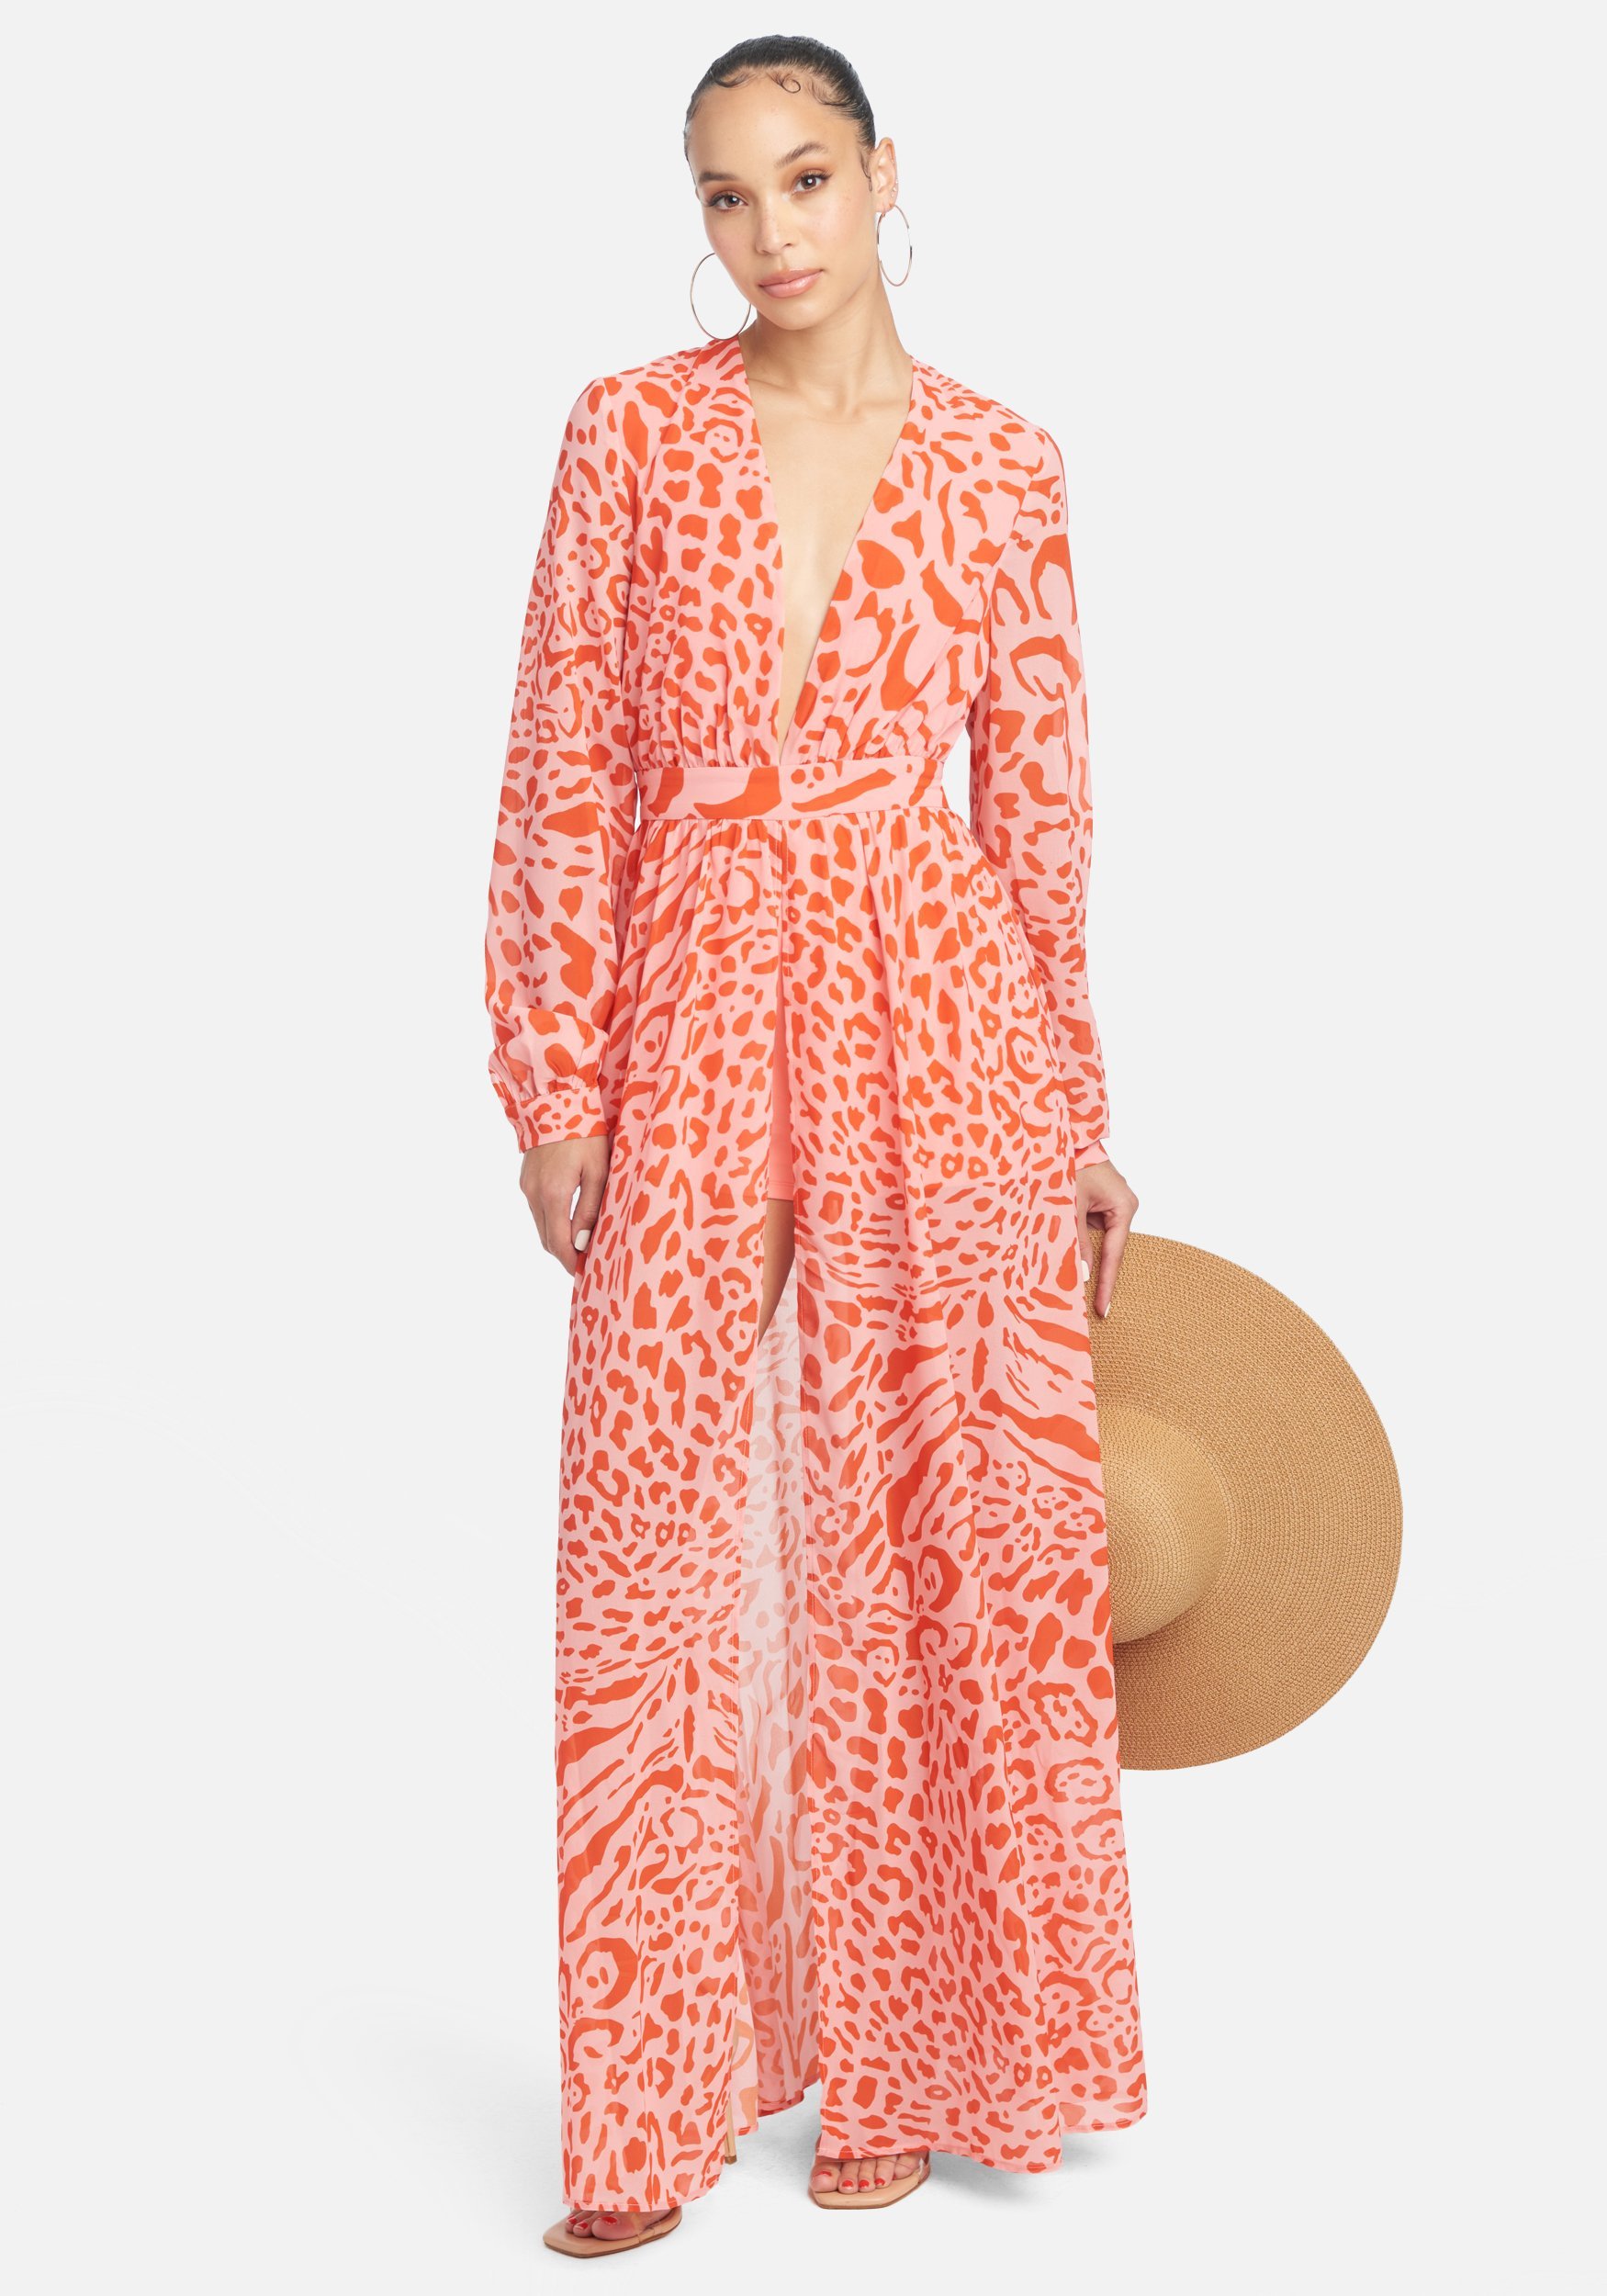 Bebe Women's Printed Deep V Maxi Dress, Size Large in Tiger Leopard Print Polyester/Viscose